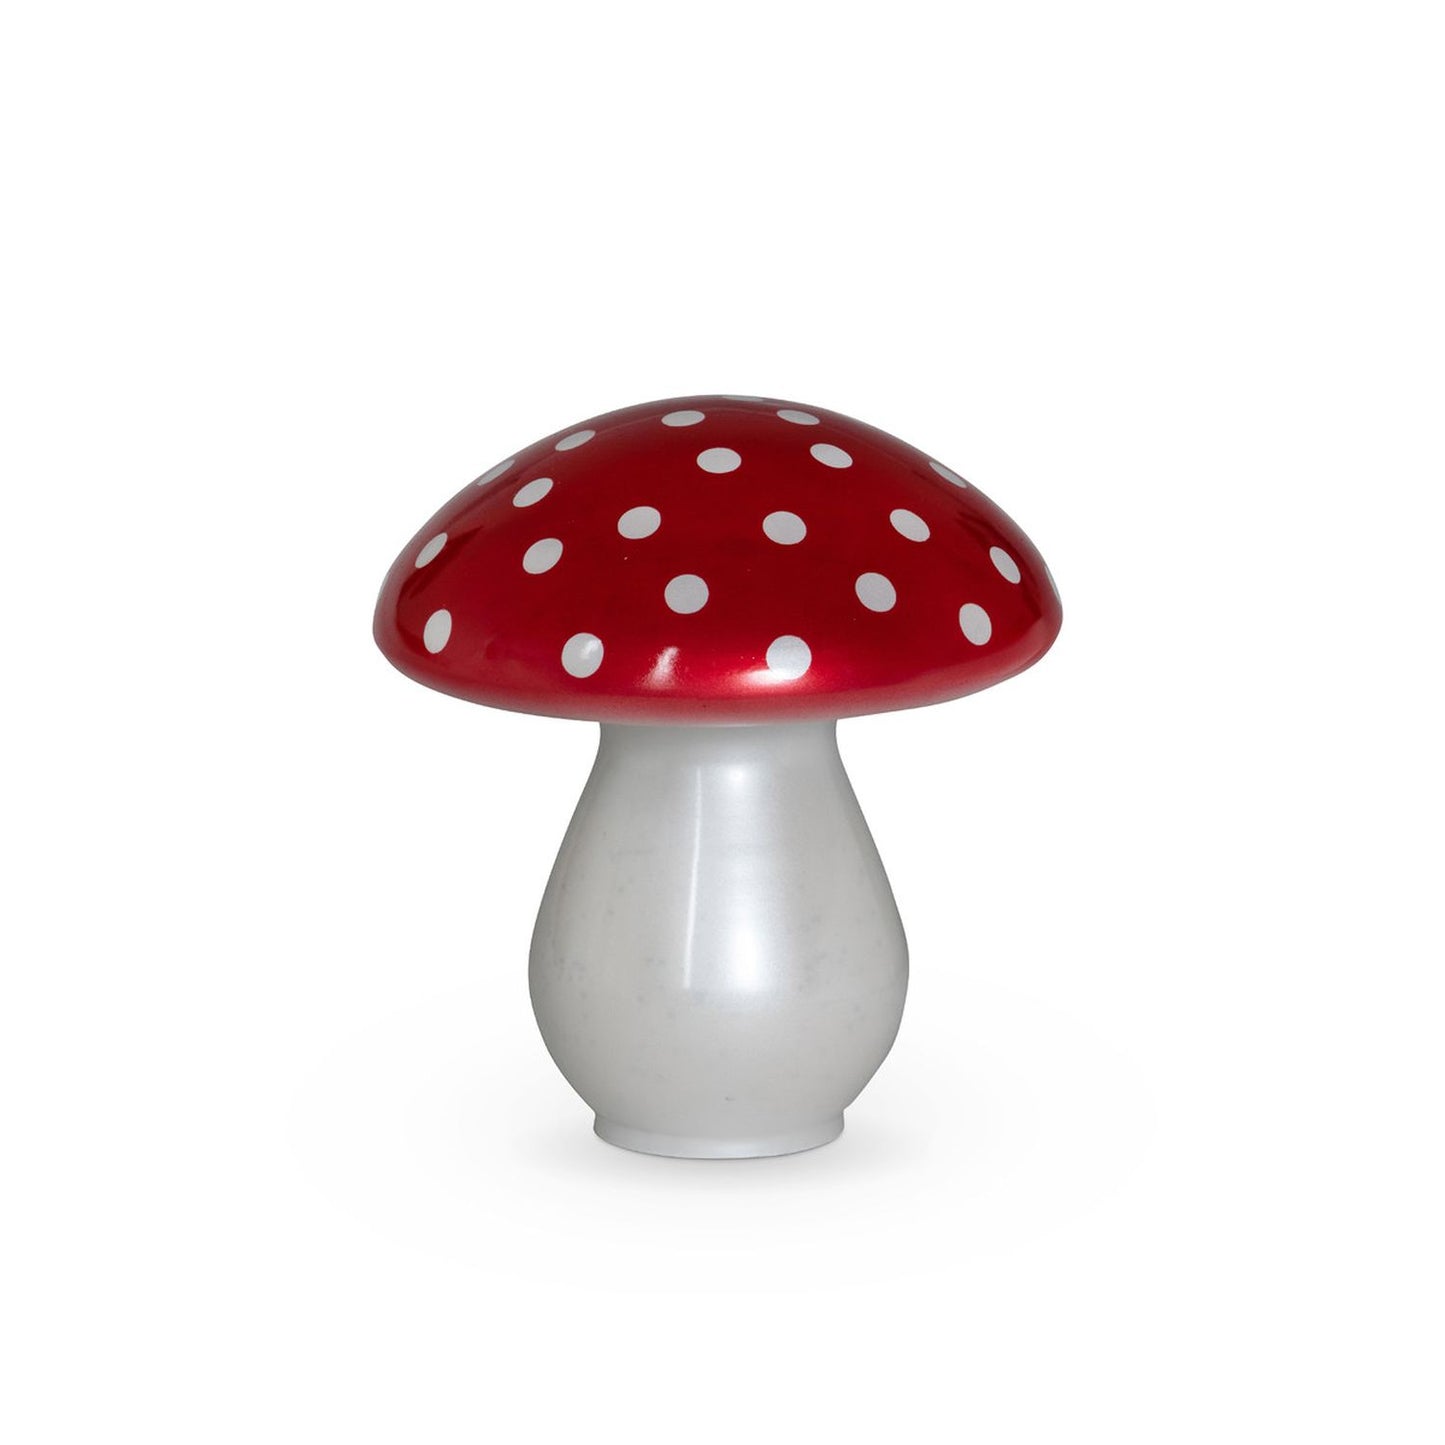 Park Hill Collection Polka Dot Mushroom